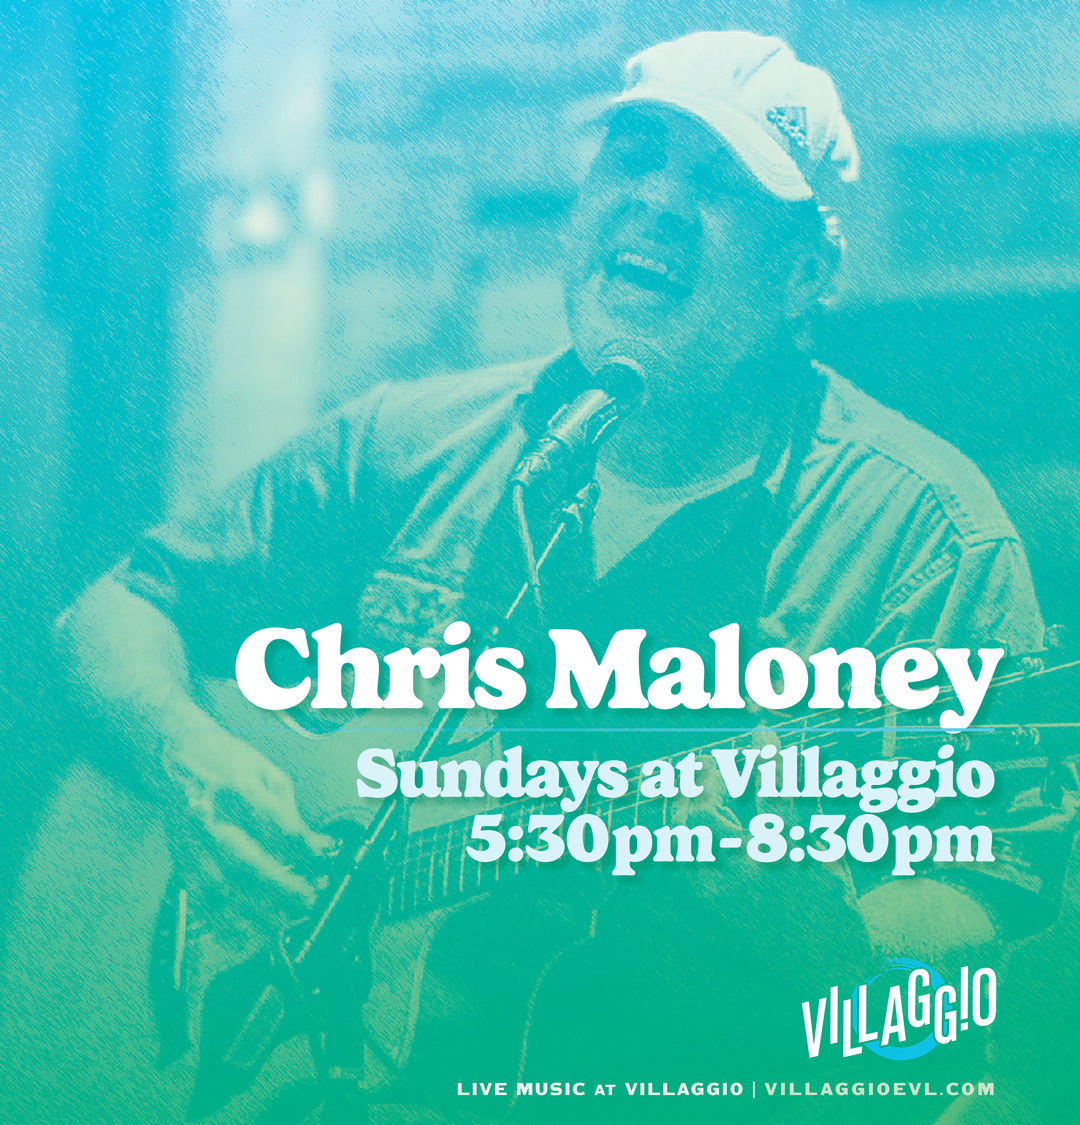 Live Music at Villaggio with Chris Maloney